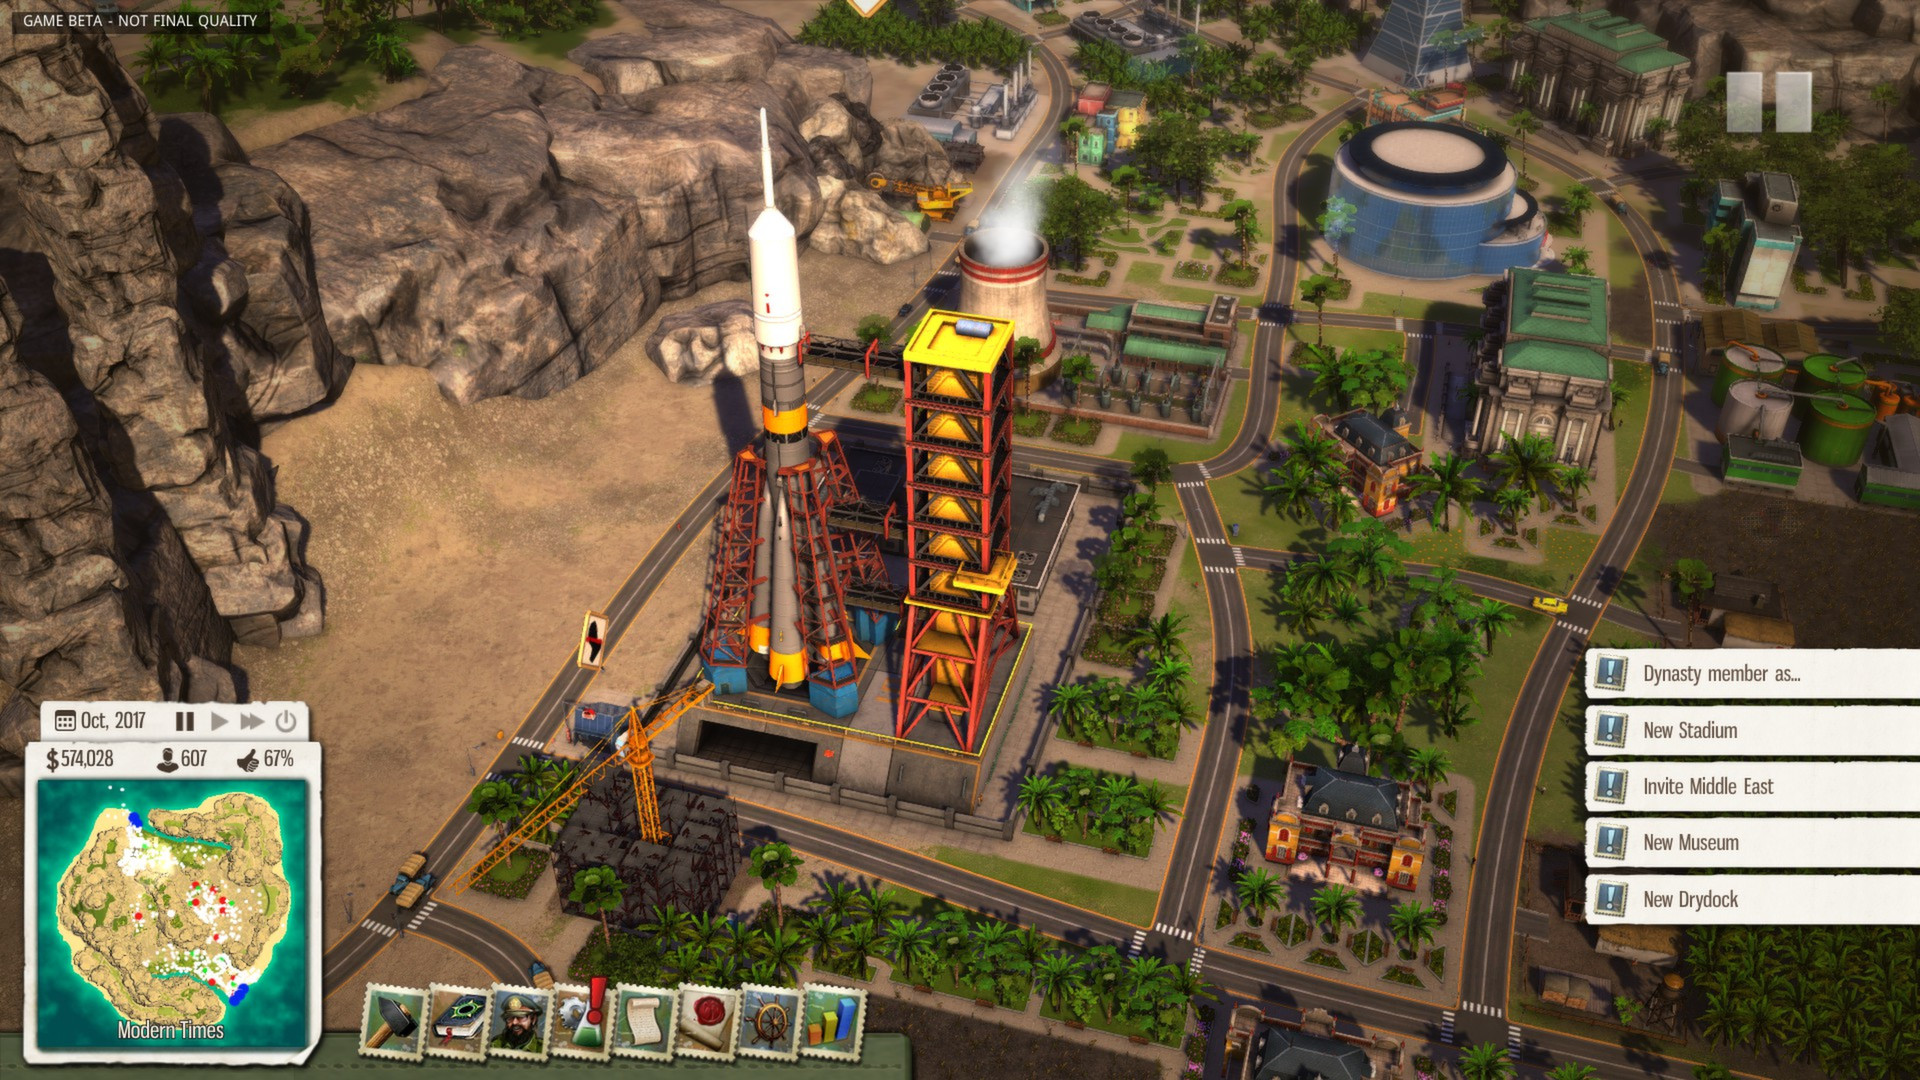 Gouverneur Zichtbaar huid Tropico 5 on Steam